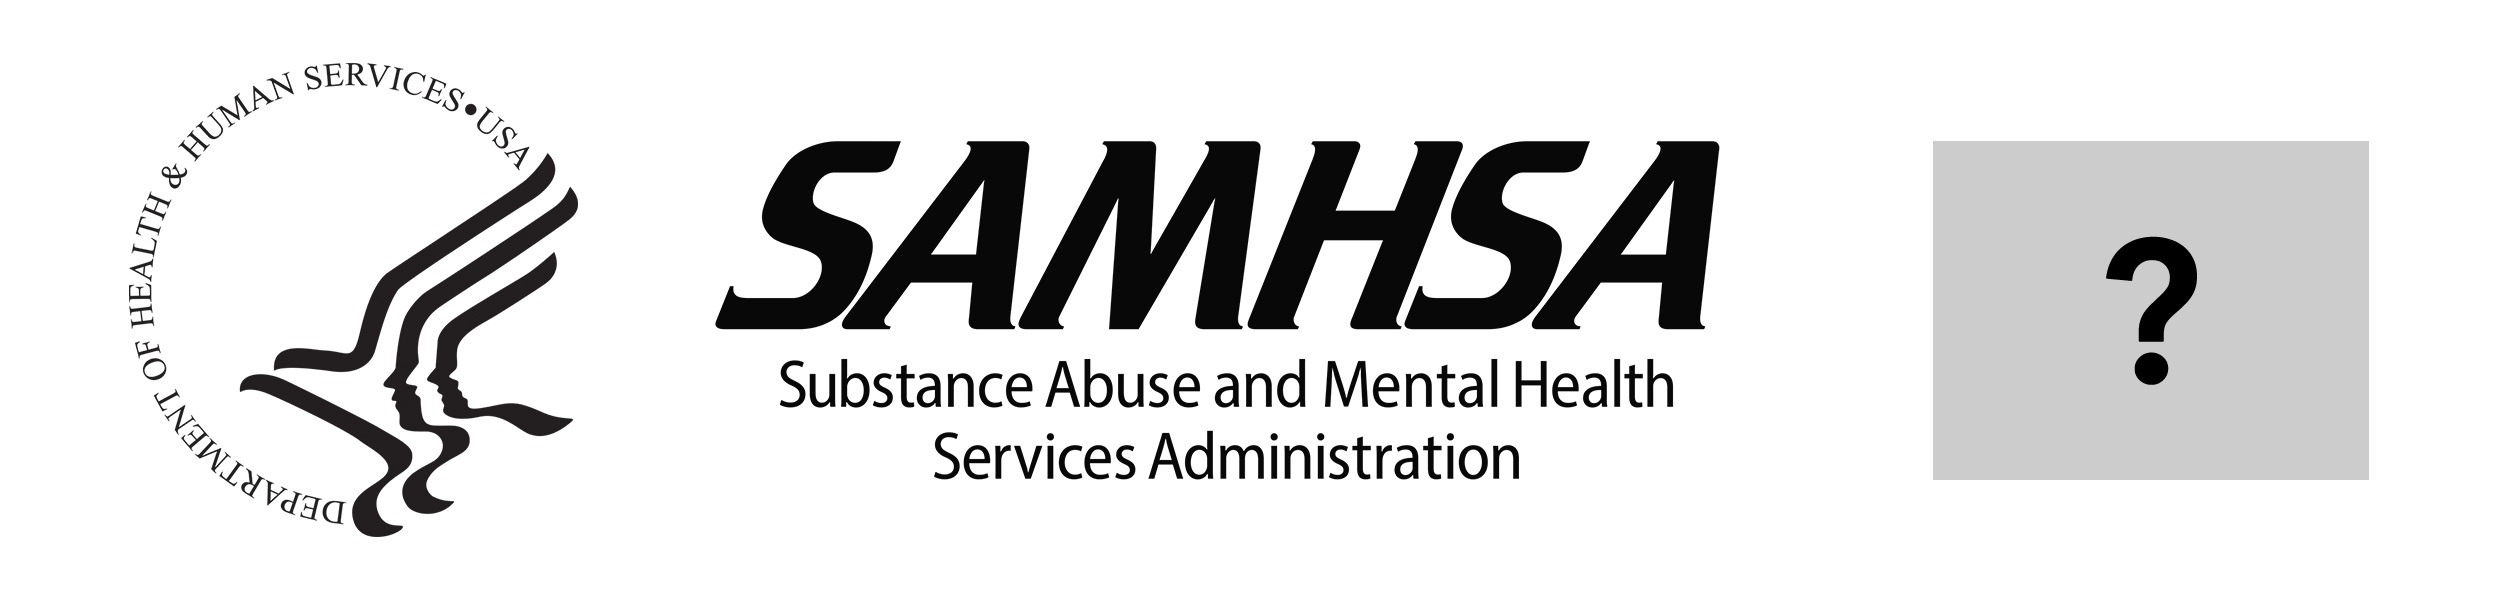 Hun Logo - Logo Use Guidelines | SAMHSA - Substance Abuse and Mental Health ...